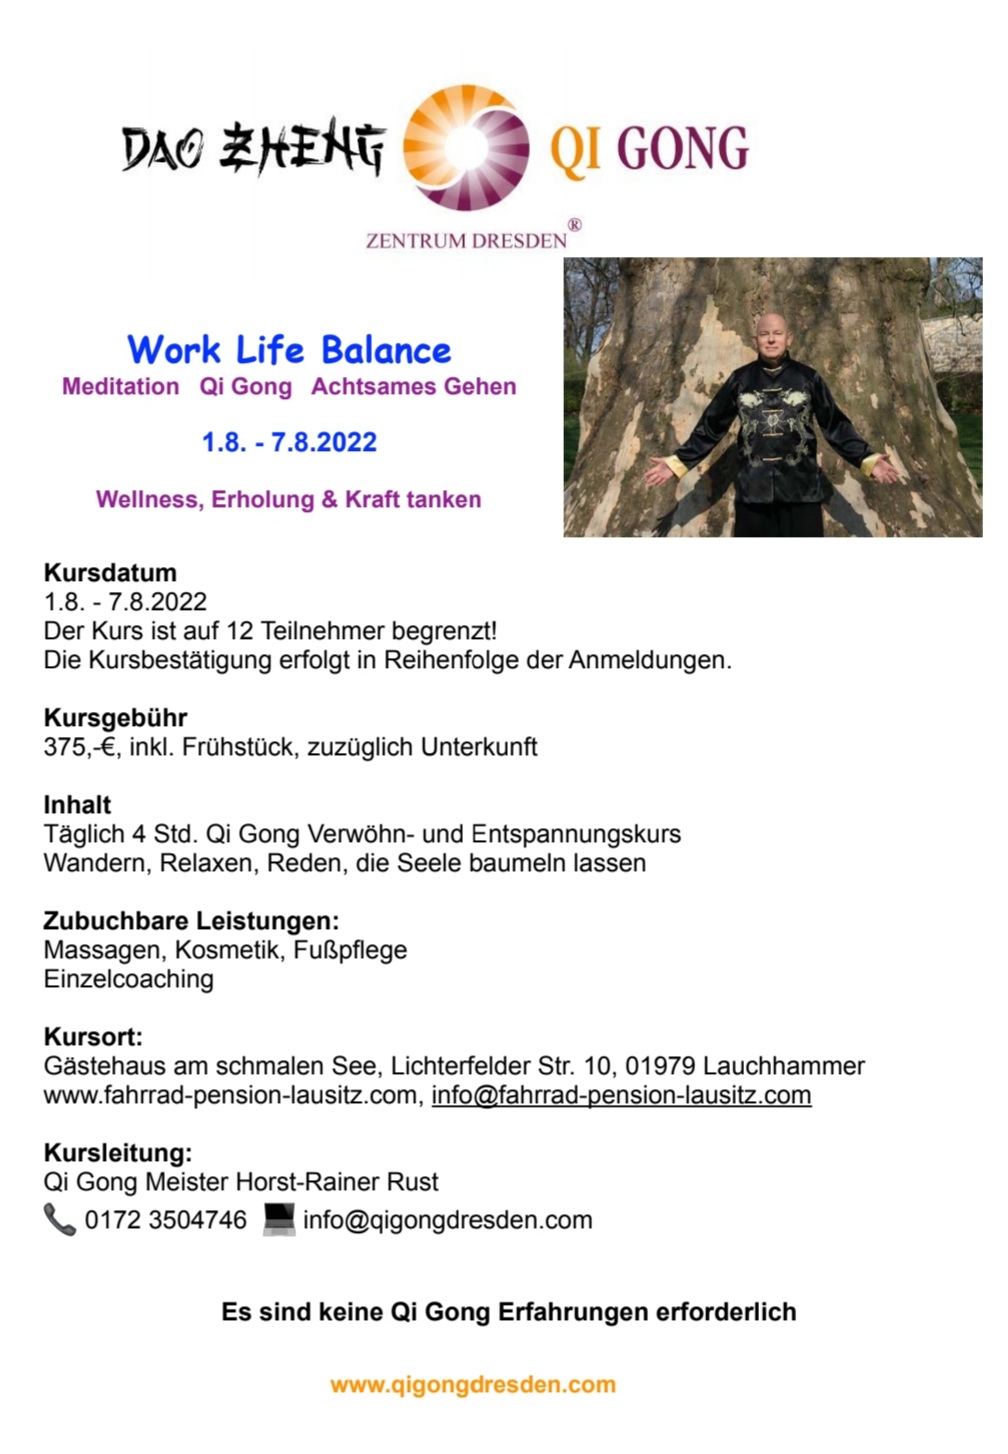 Work Life Balance Workshop